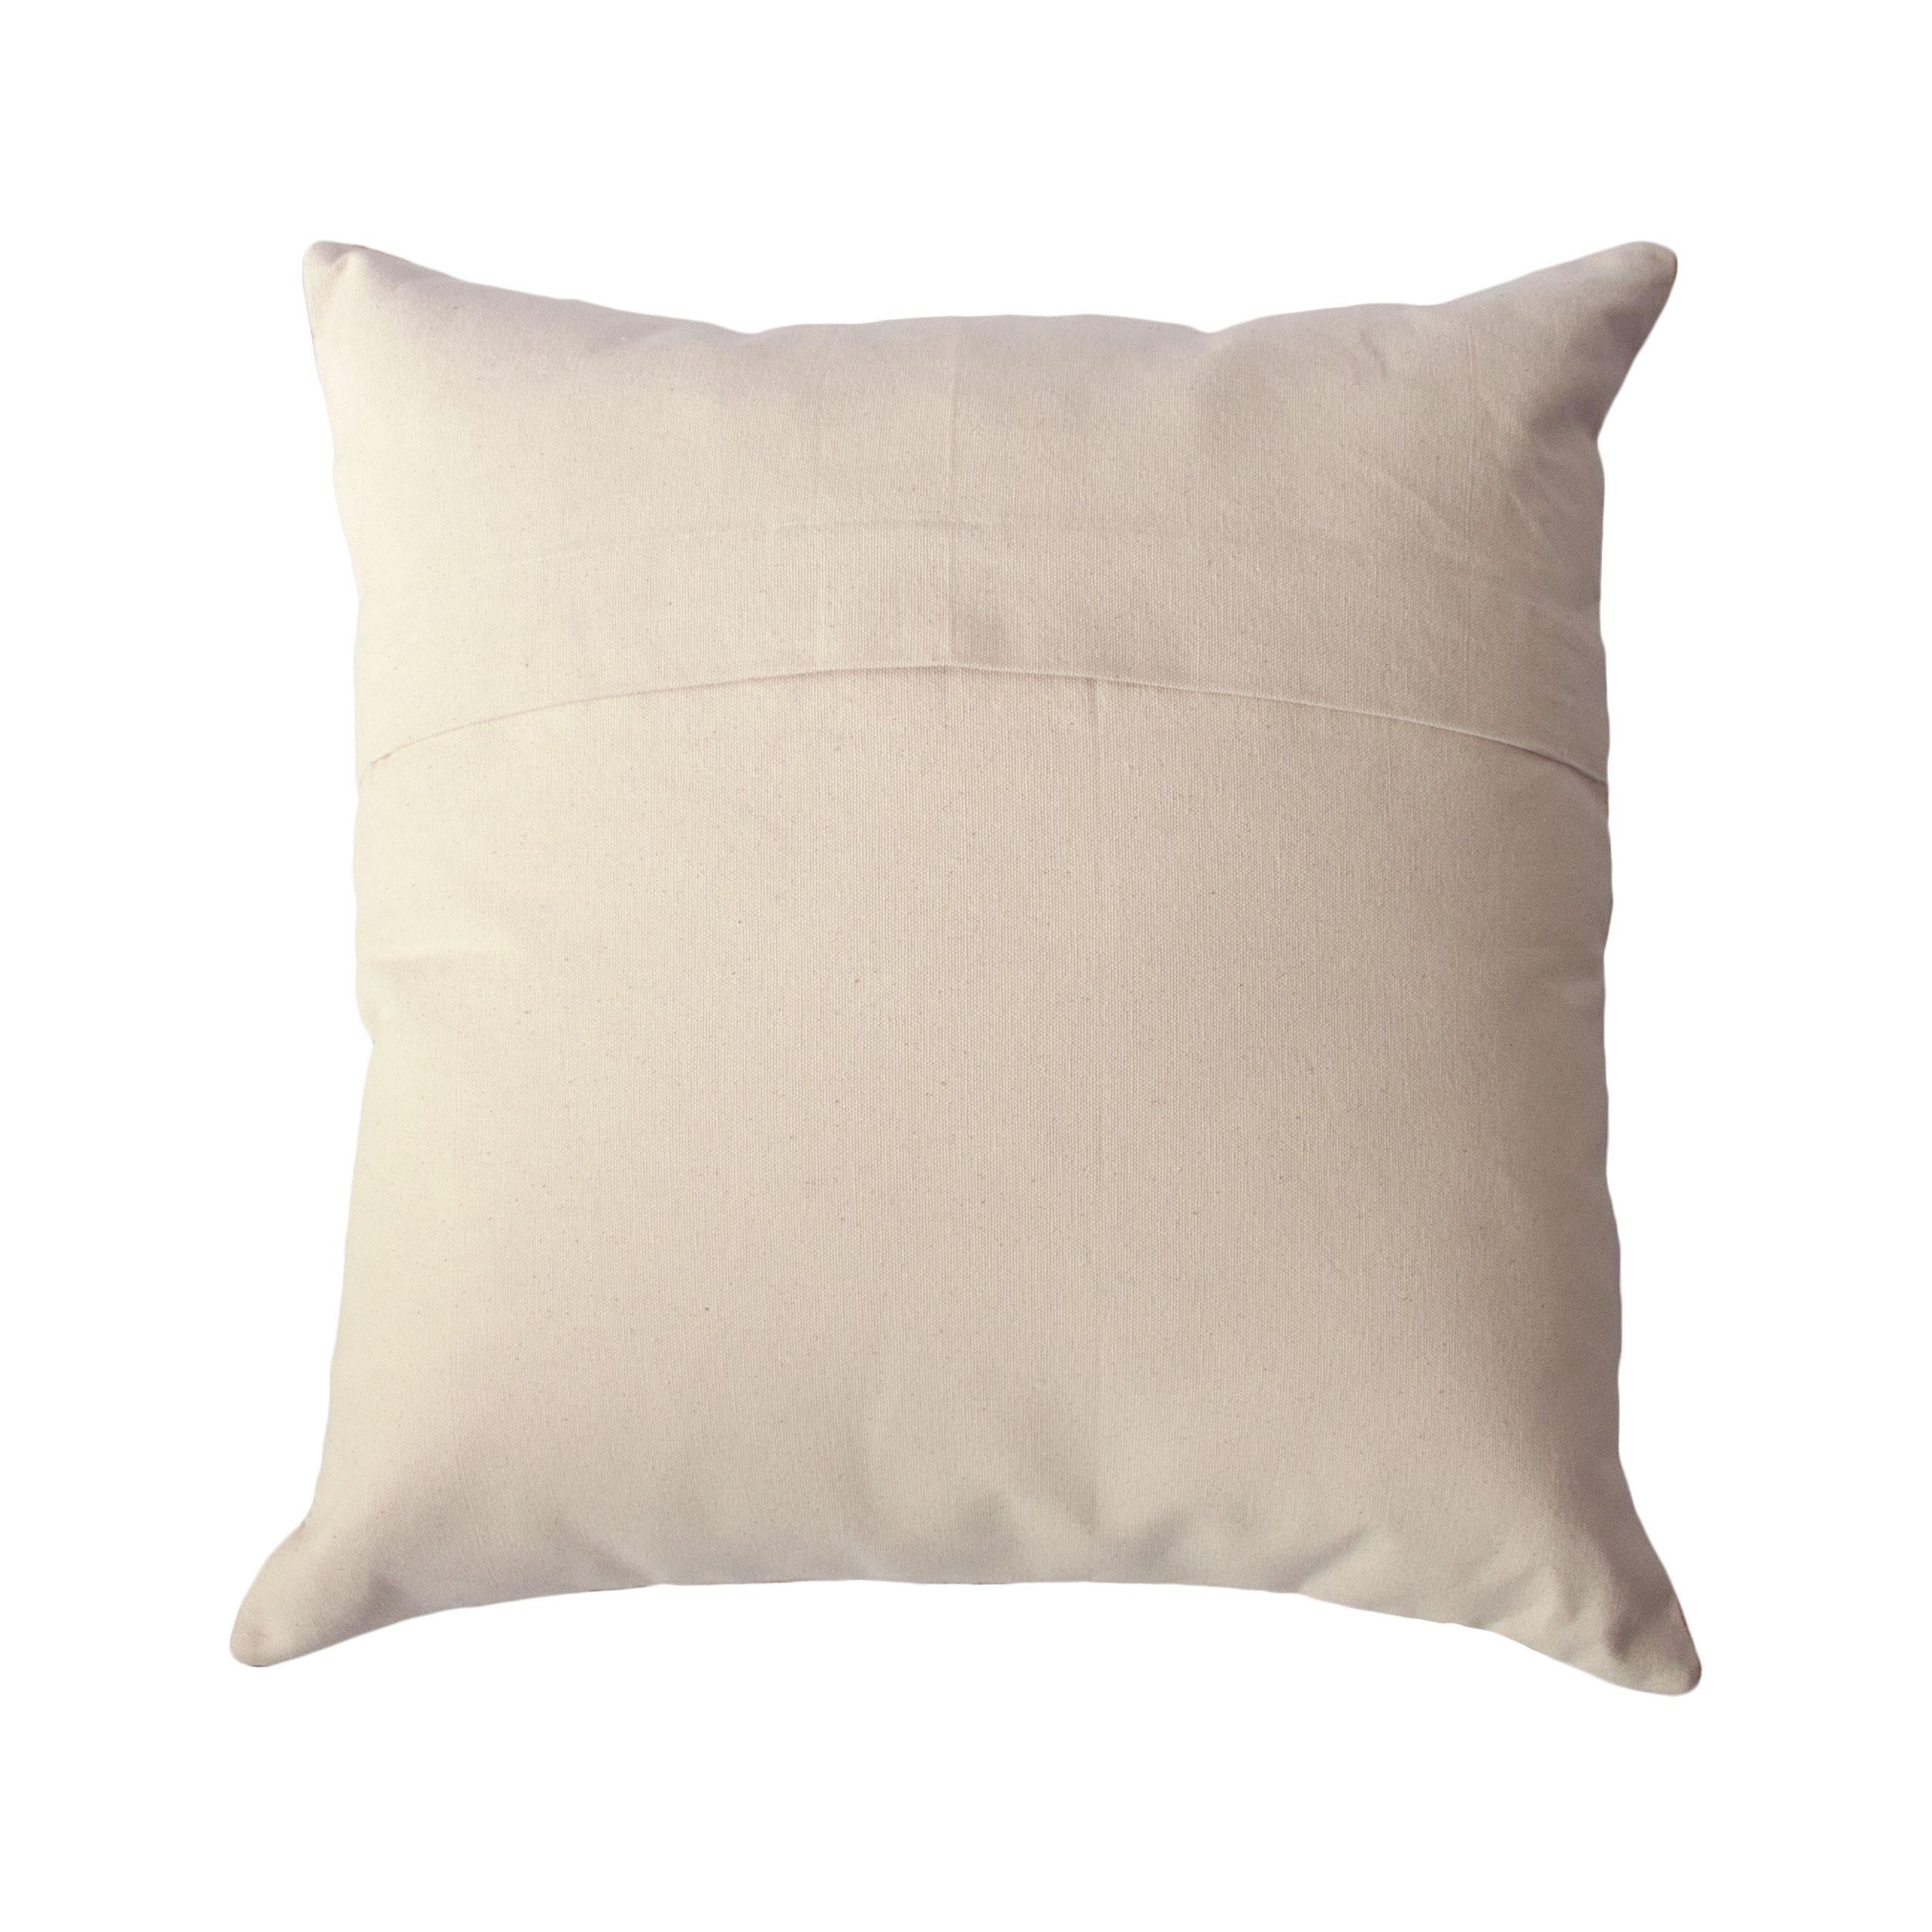 Hand-Woven Geometric Maya Stripe Modern Throw Pillow Cover